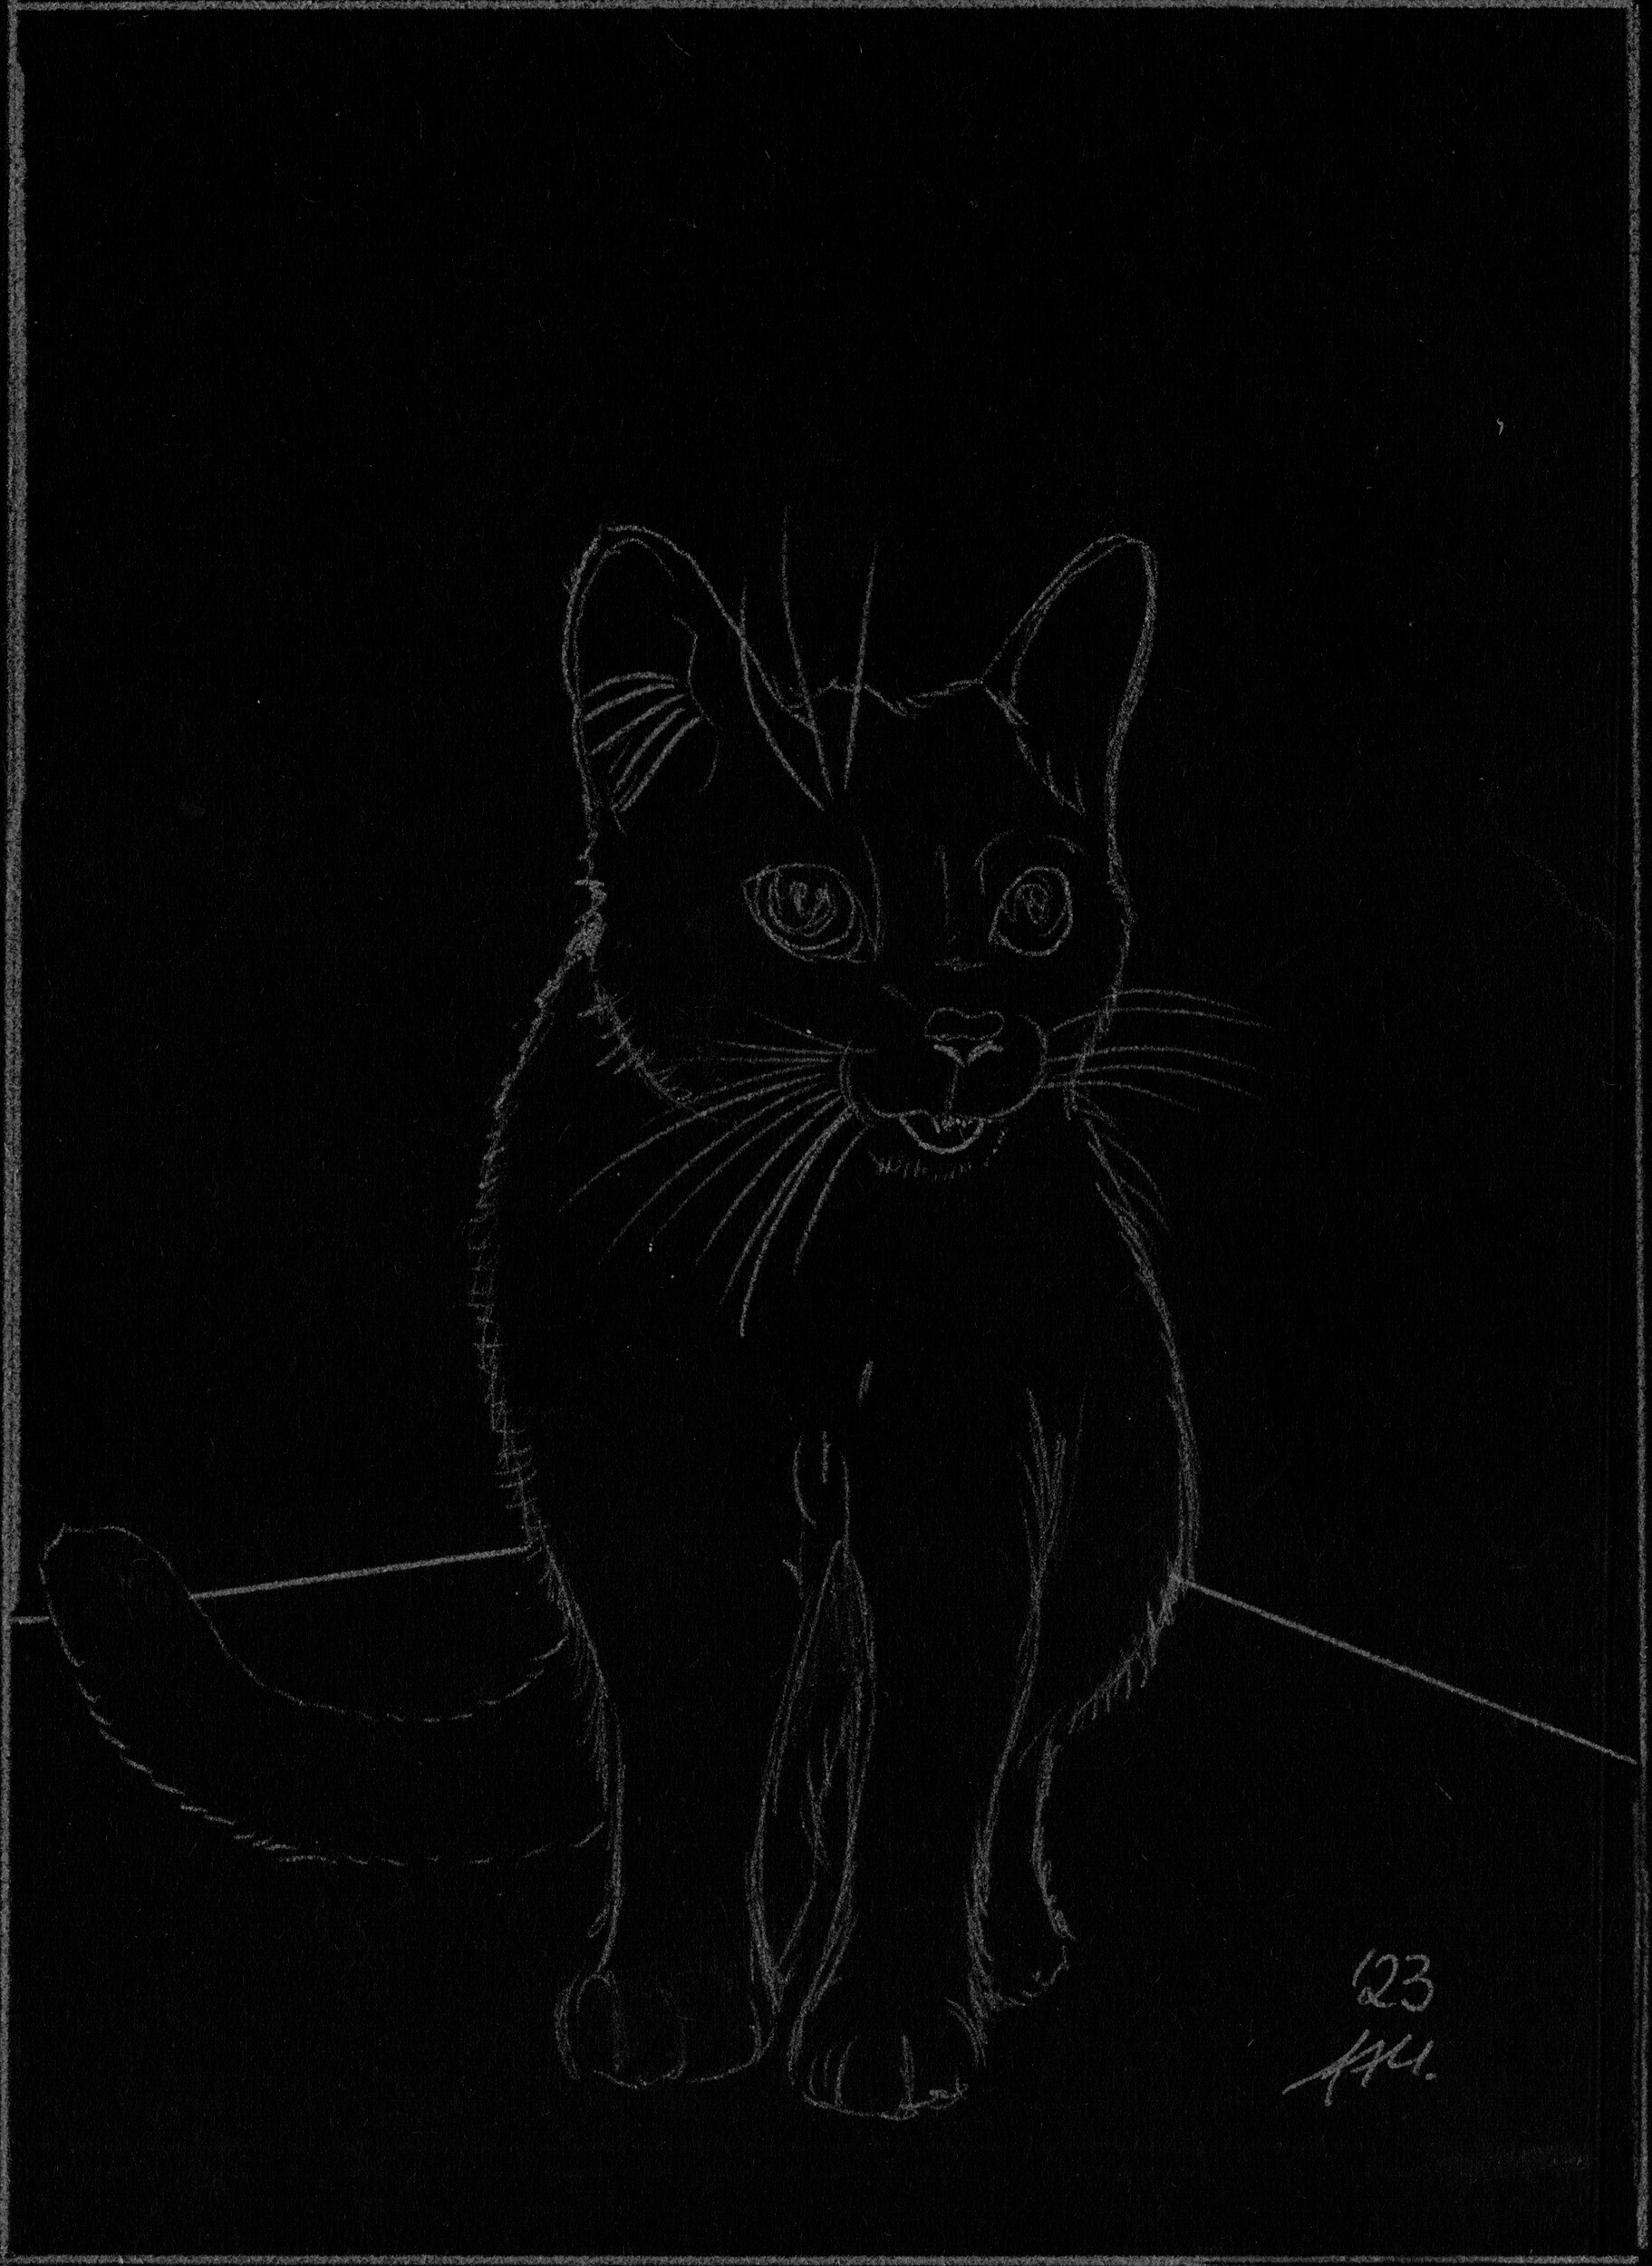 Katze auf Schwarz - Skizze